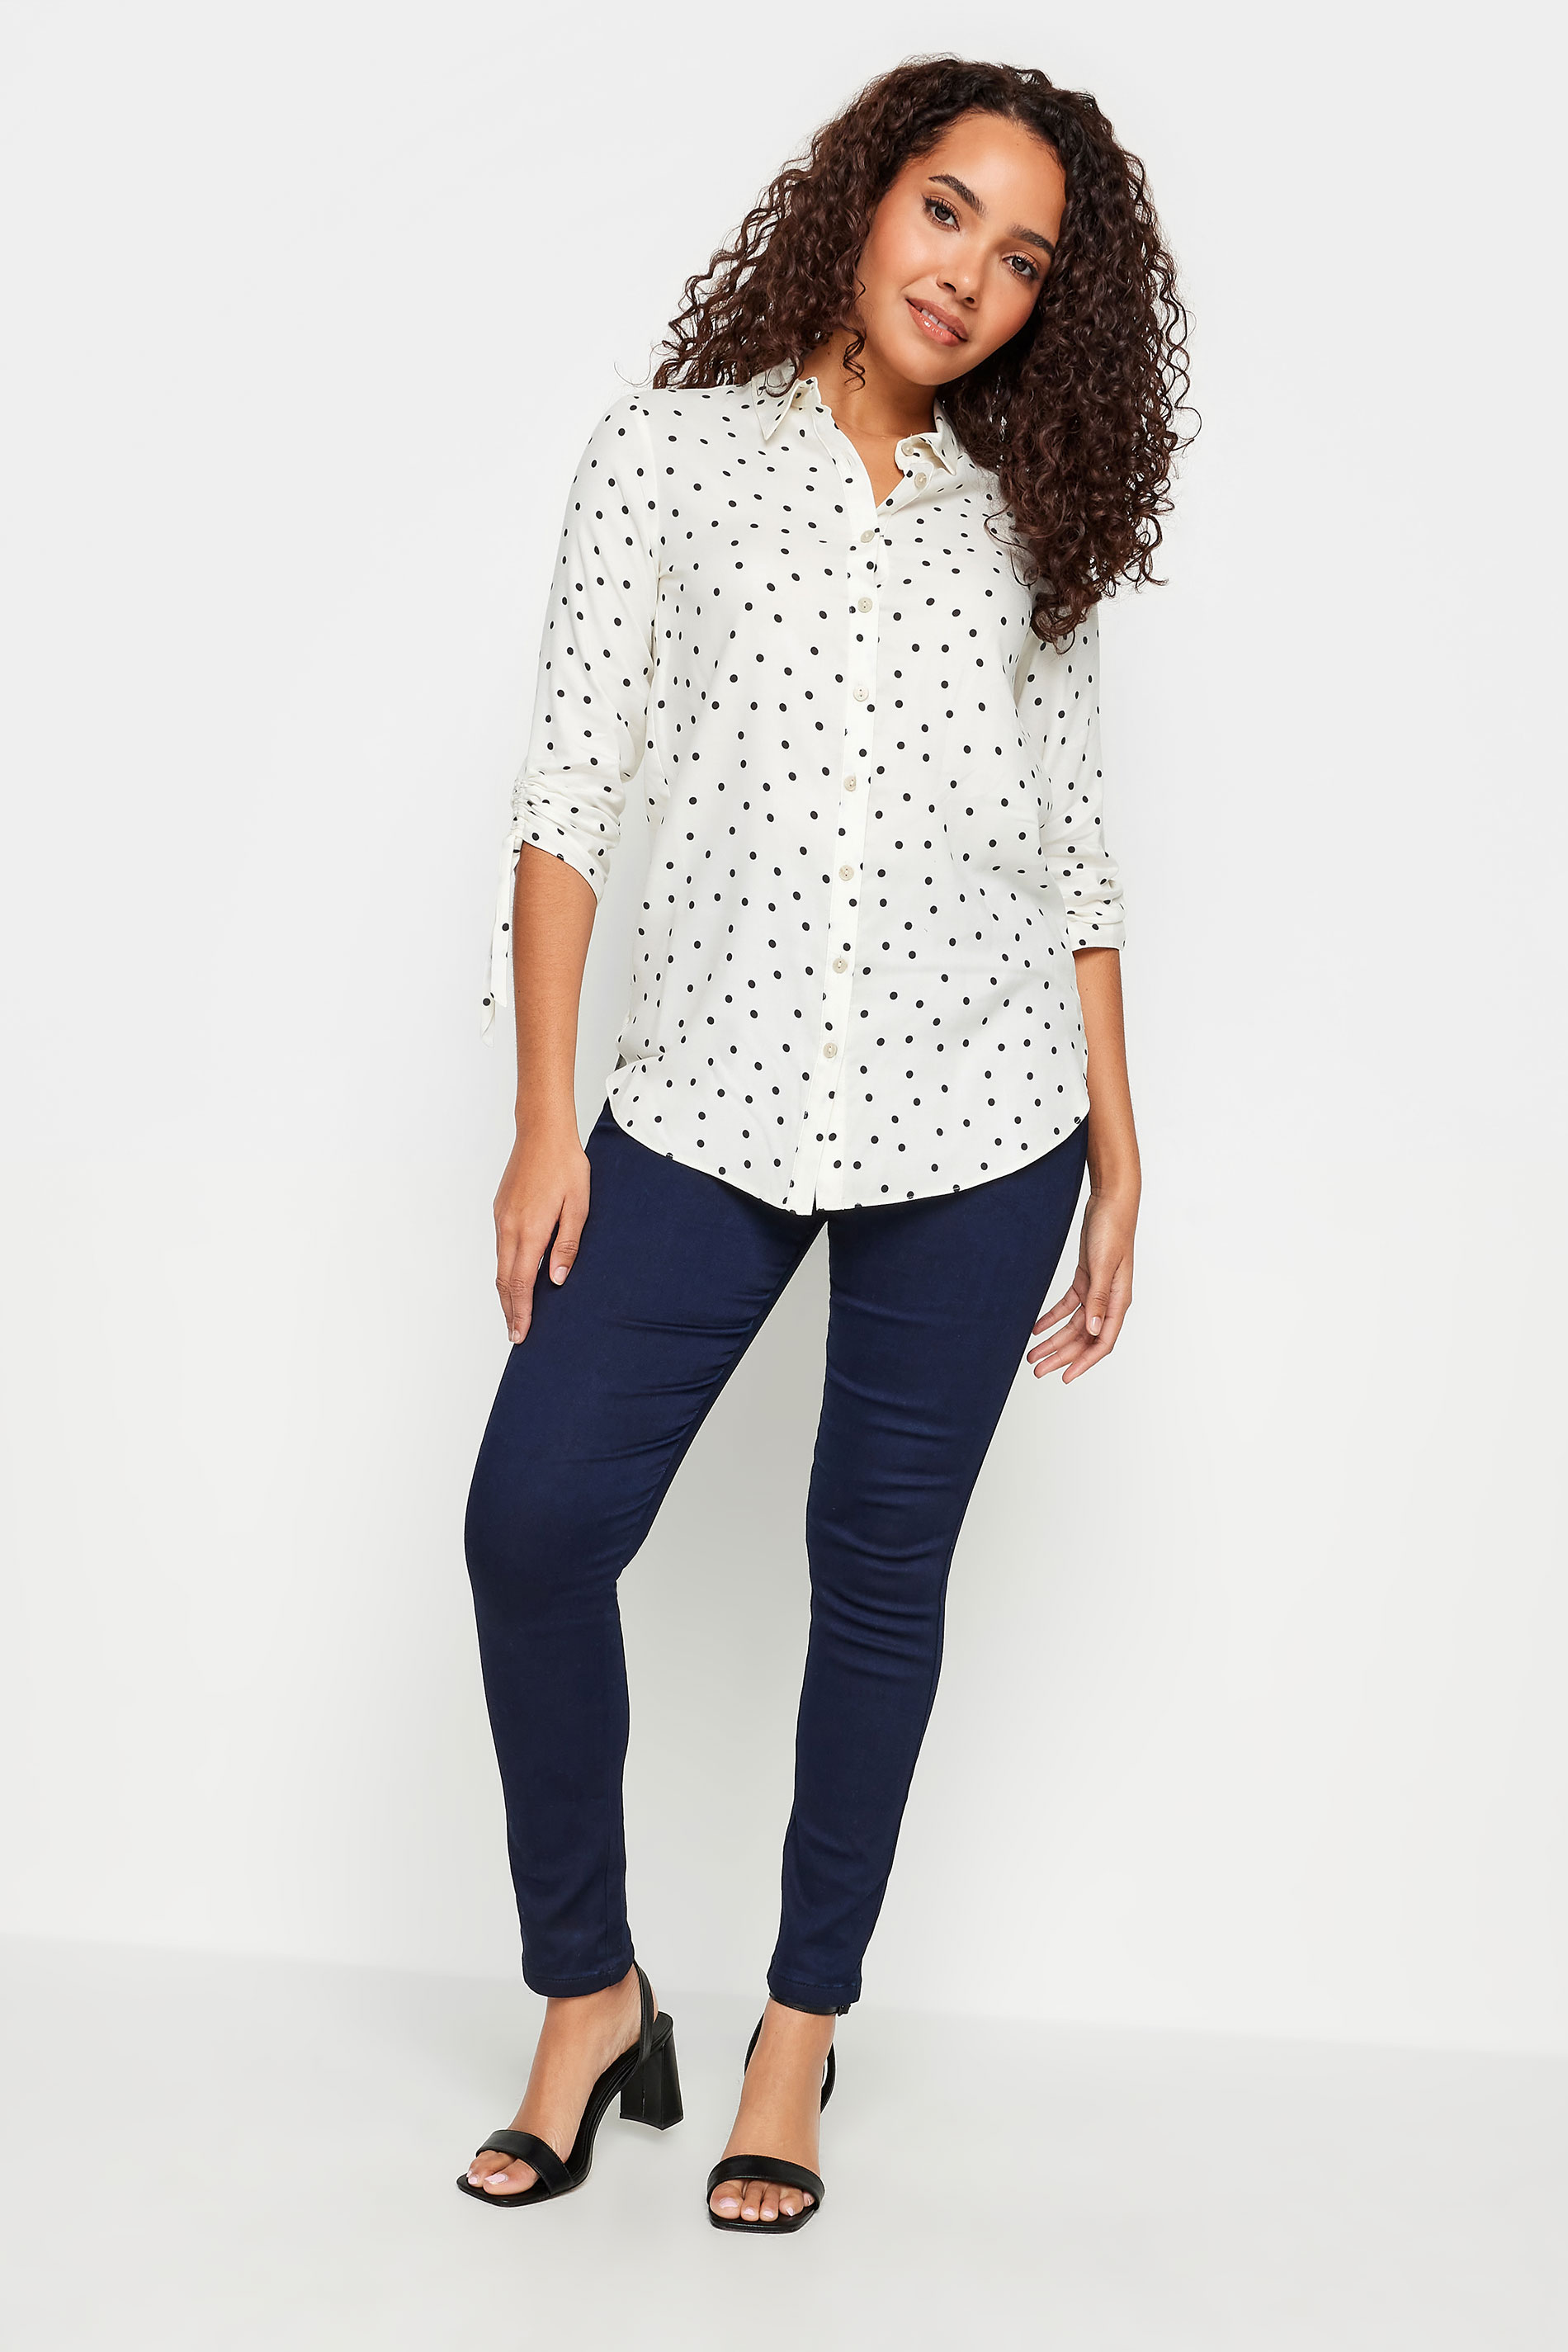 M&Co White Polka Dot Print Ruched Sleeve Shirt | M&Co 2